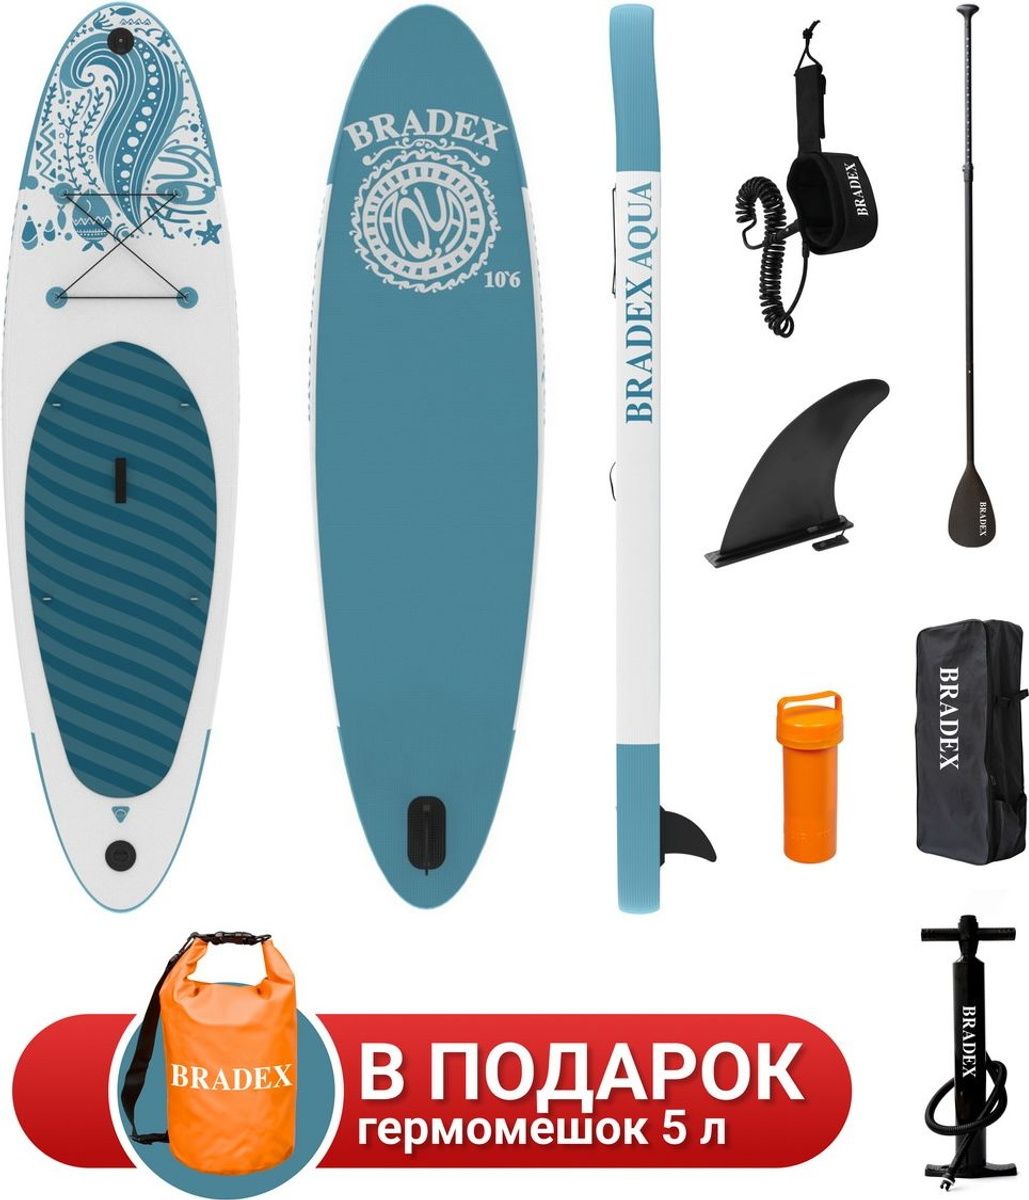 Bradex Aqua 10’6 из каталога транспорт в Санкт-Петербурге по цене 29990 ₽